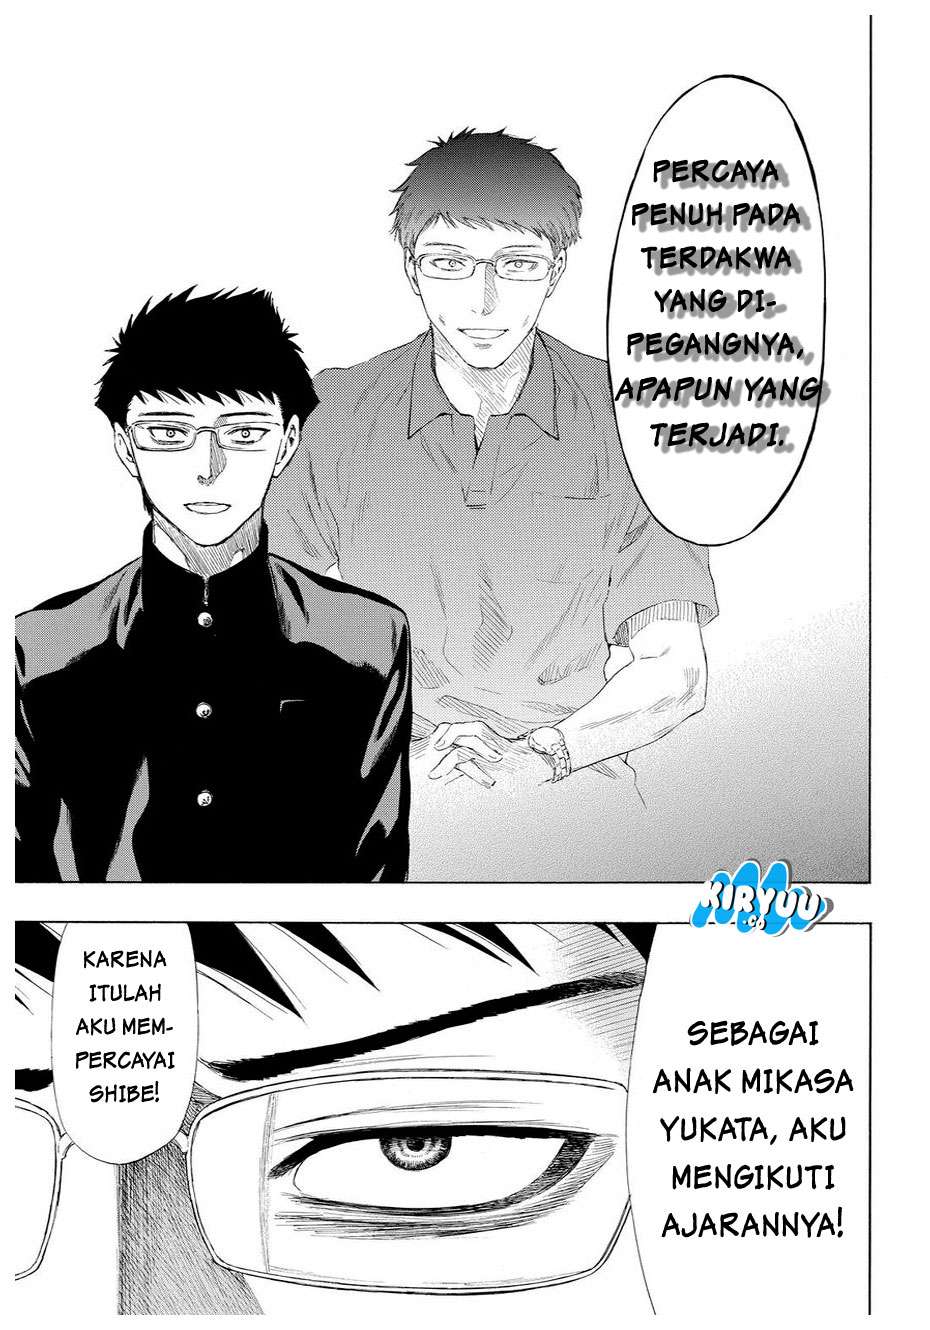 Tomodachi Game Chapter 29 Bahasa Indonesia